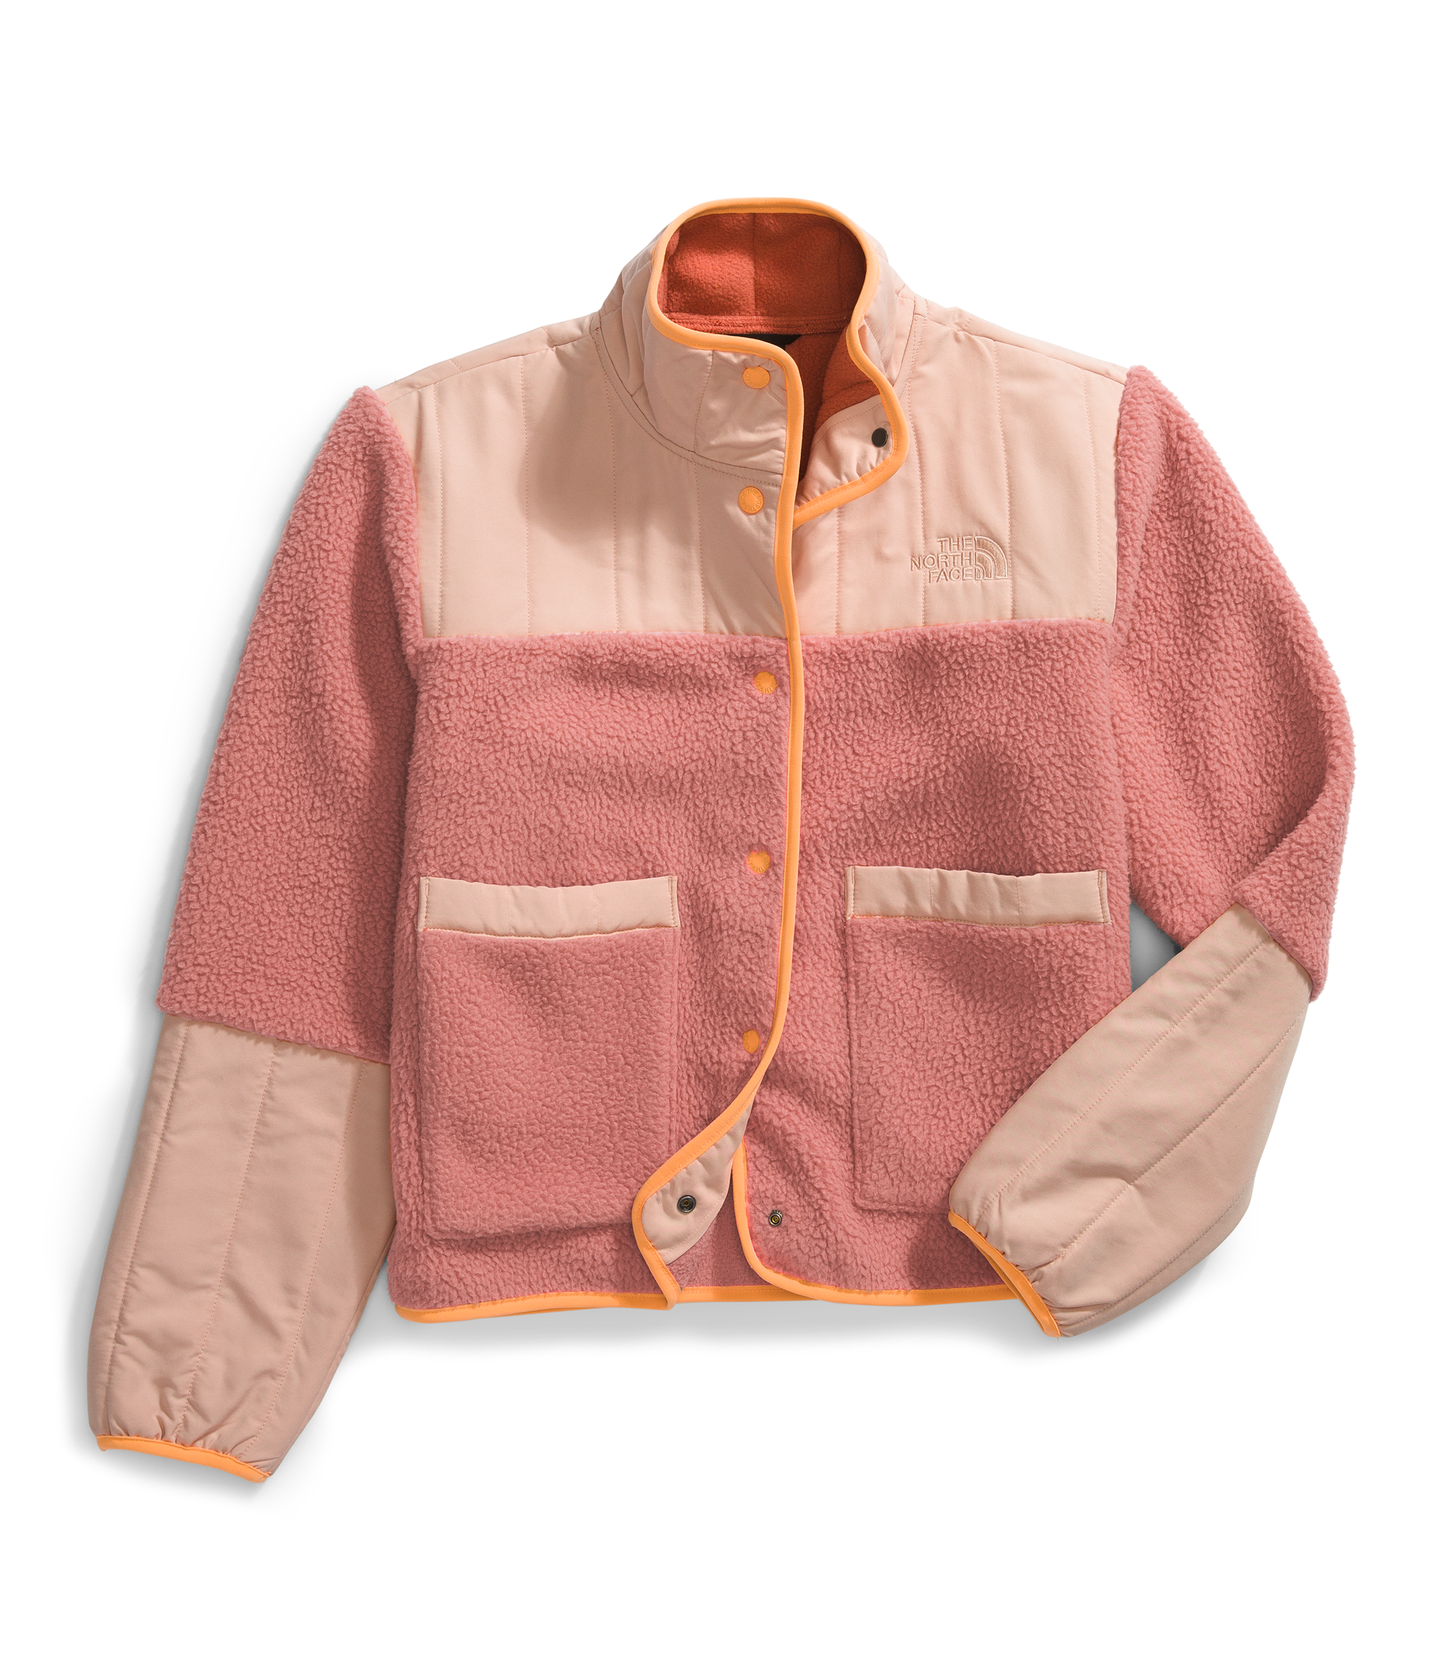 Outerwear - THE NORTH FACE - Cragmont Fleece Jacket - PLENTY